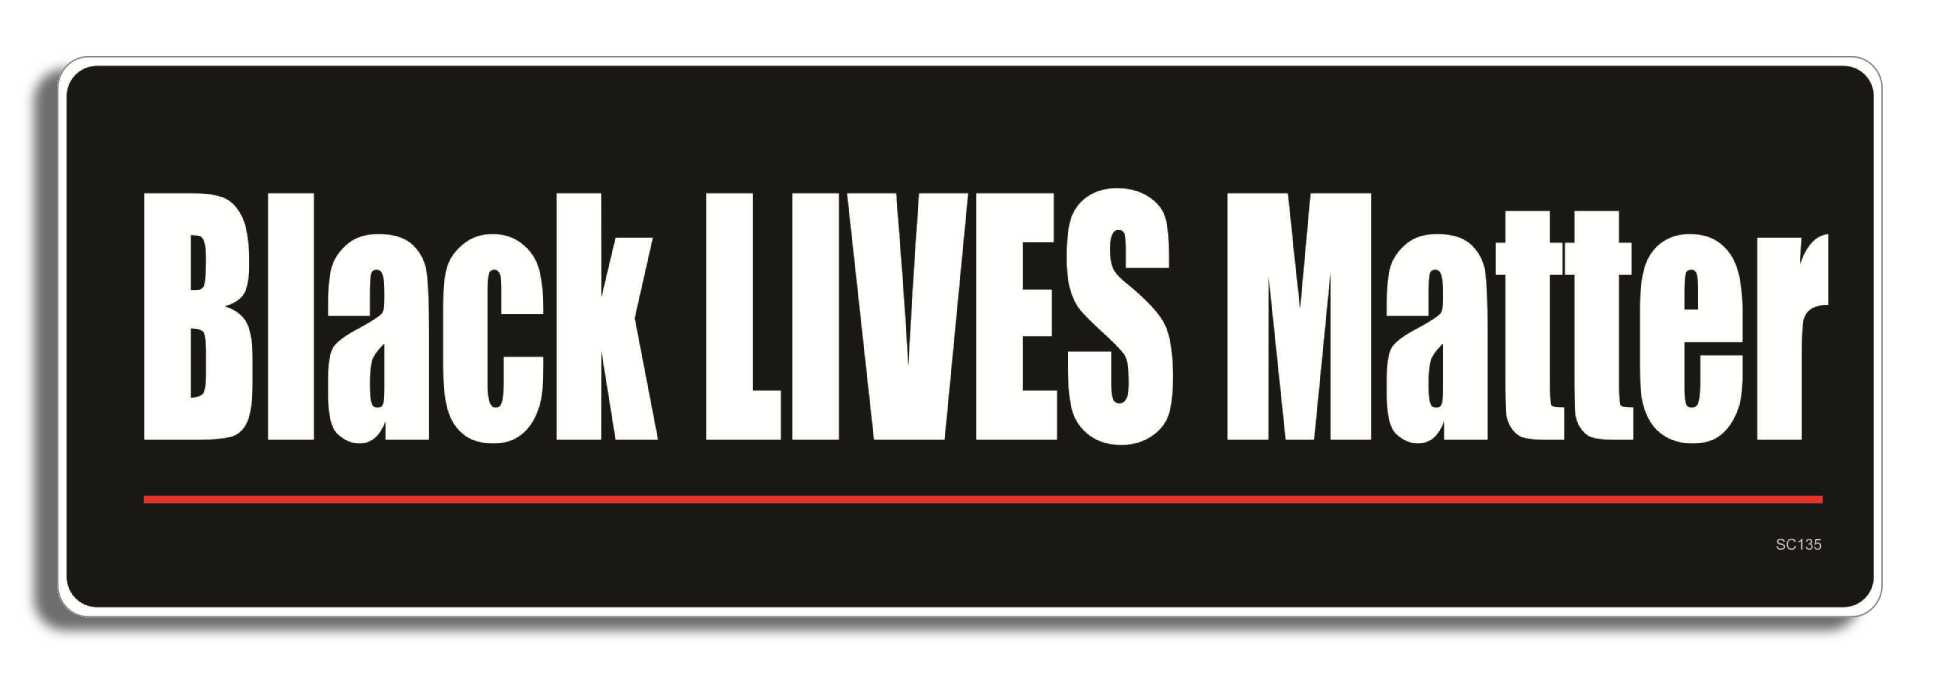 Black Lives Matter - 3" x 10" Bumper Sticker--Car Magnet- -  Decal Bumper Sticker-political Bumper Sticker Car Magnet Black Lives Matter-   Decal for carsconservative, liberal, Political